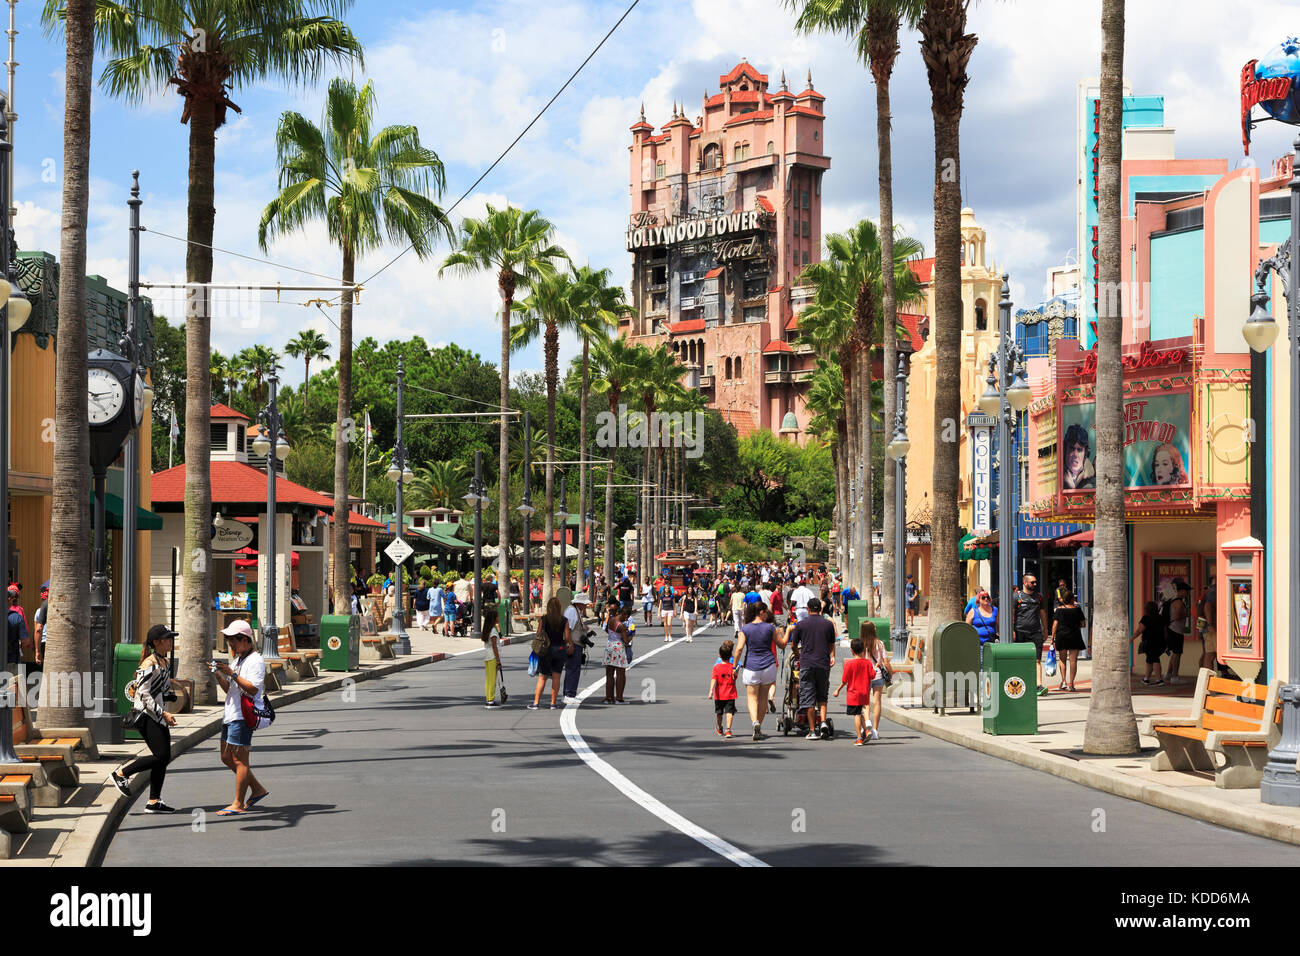 Holywood Tower Hotel,Walt Disney World Resort, theme park, Orlando, Florida, USA Stock Photo